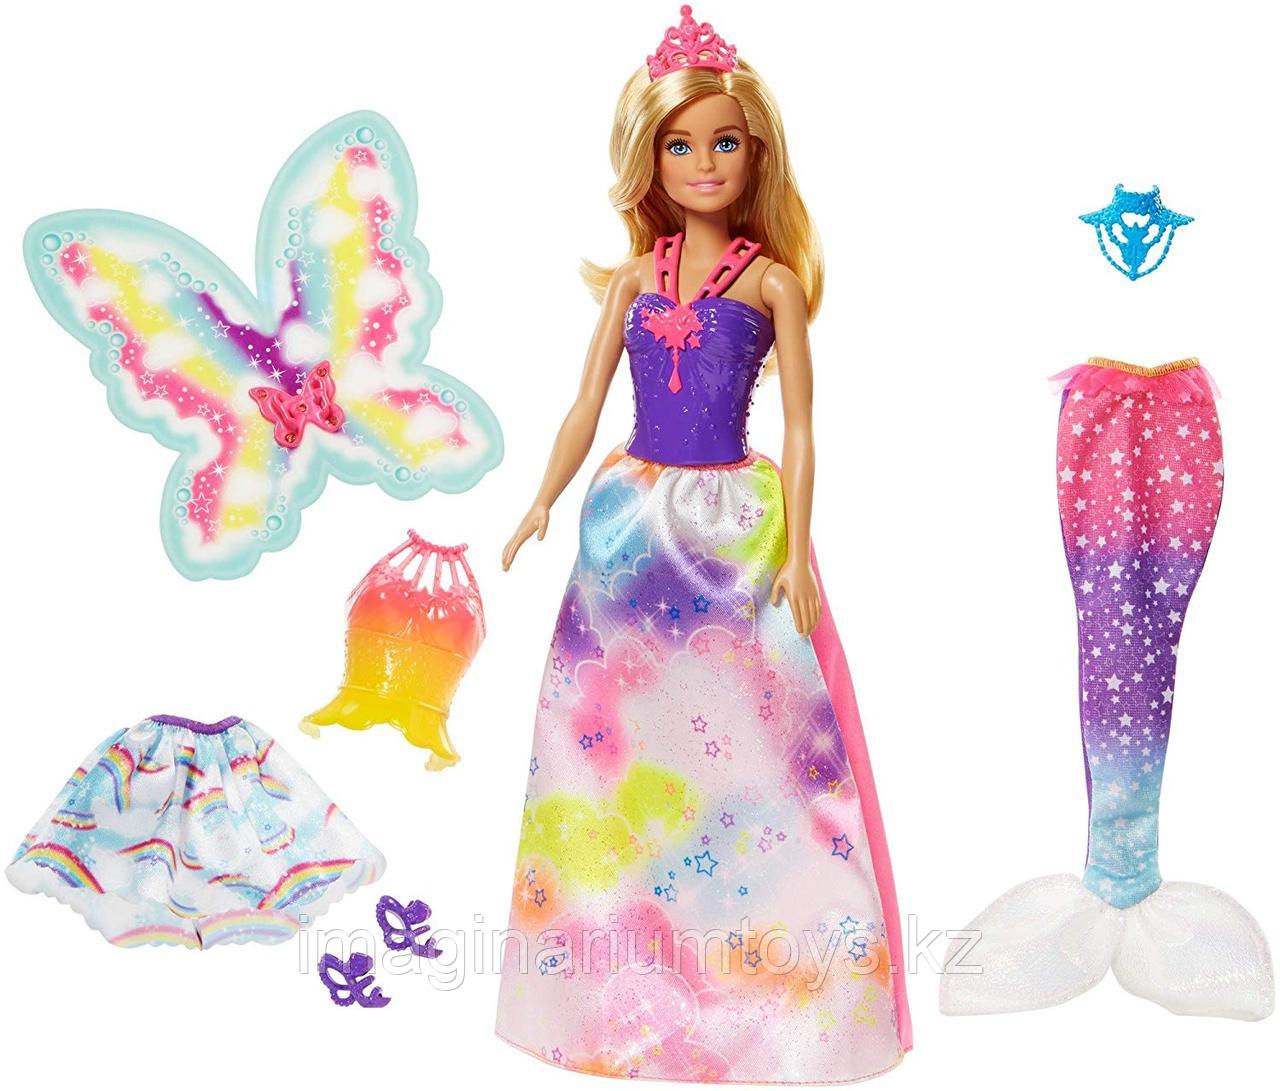 Кукла Барби Dreamtopia с комплектом одежды, фото 1